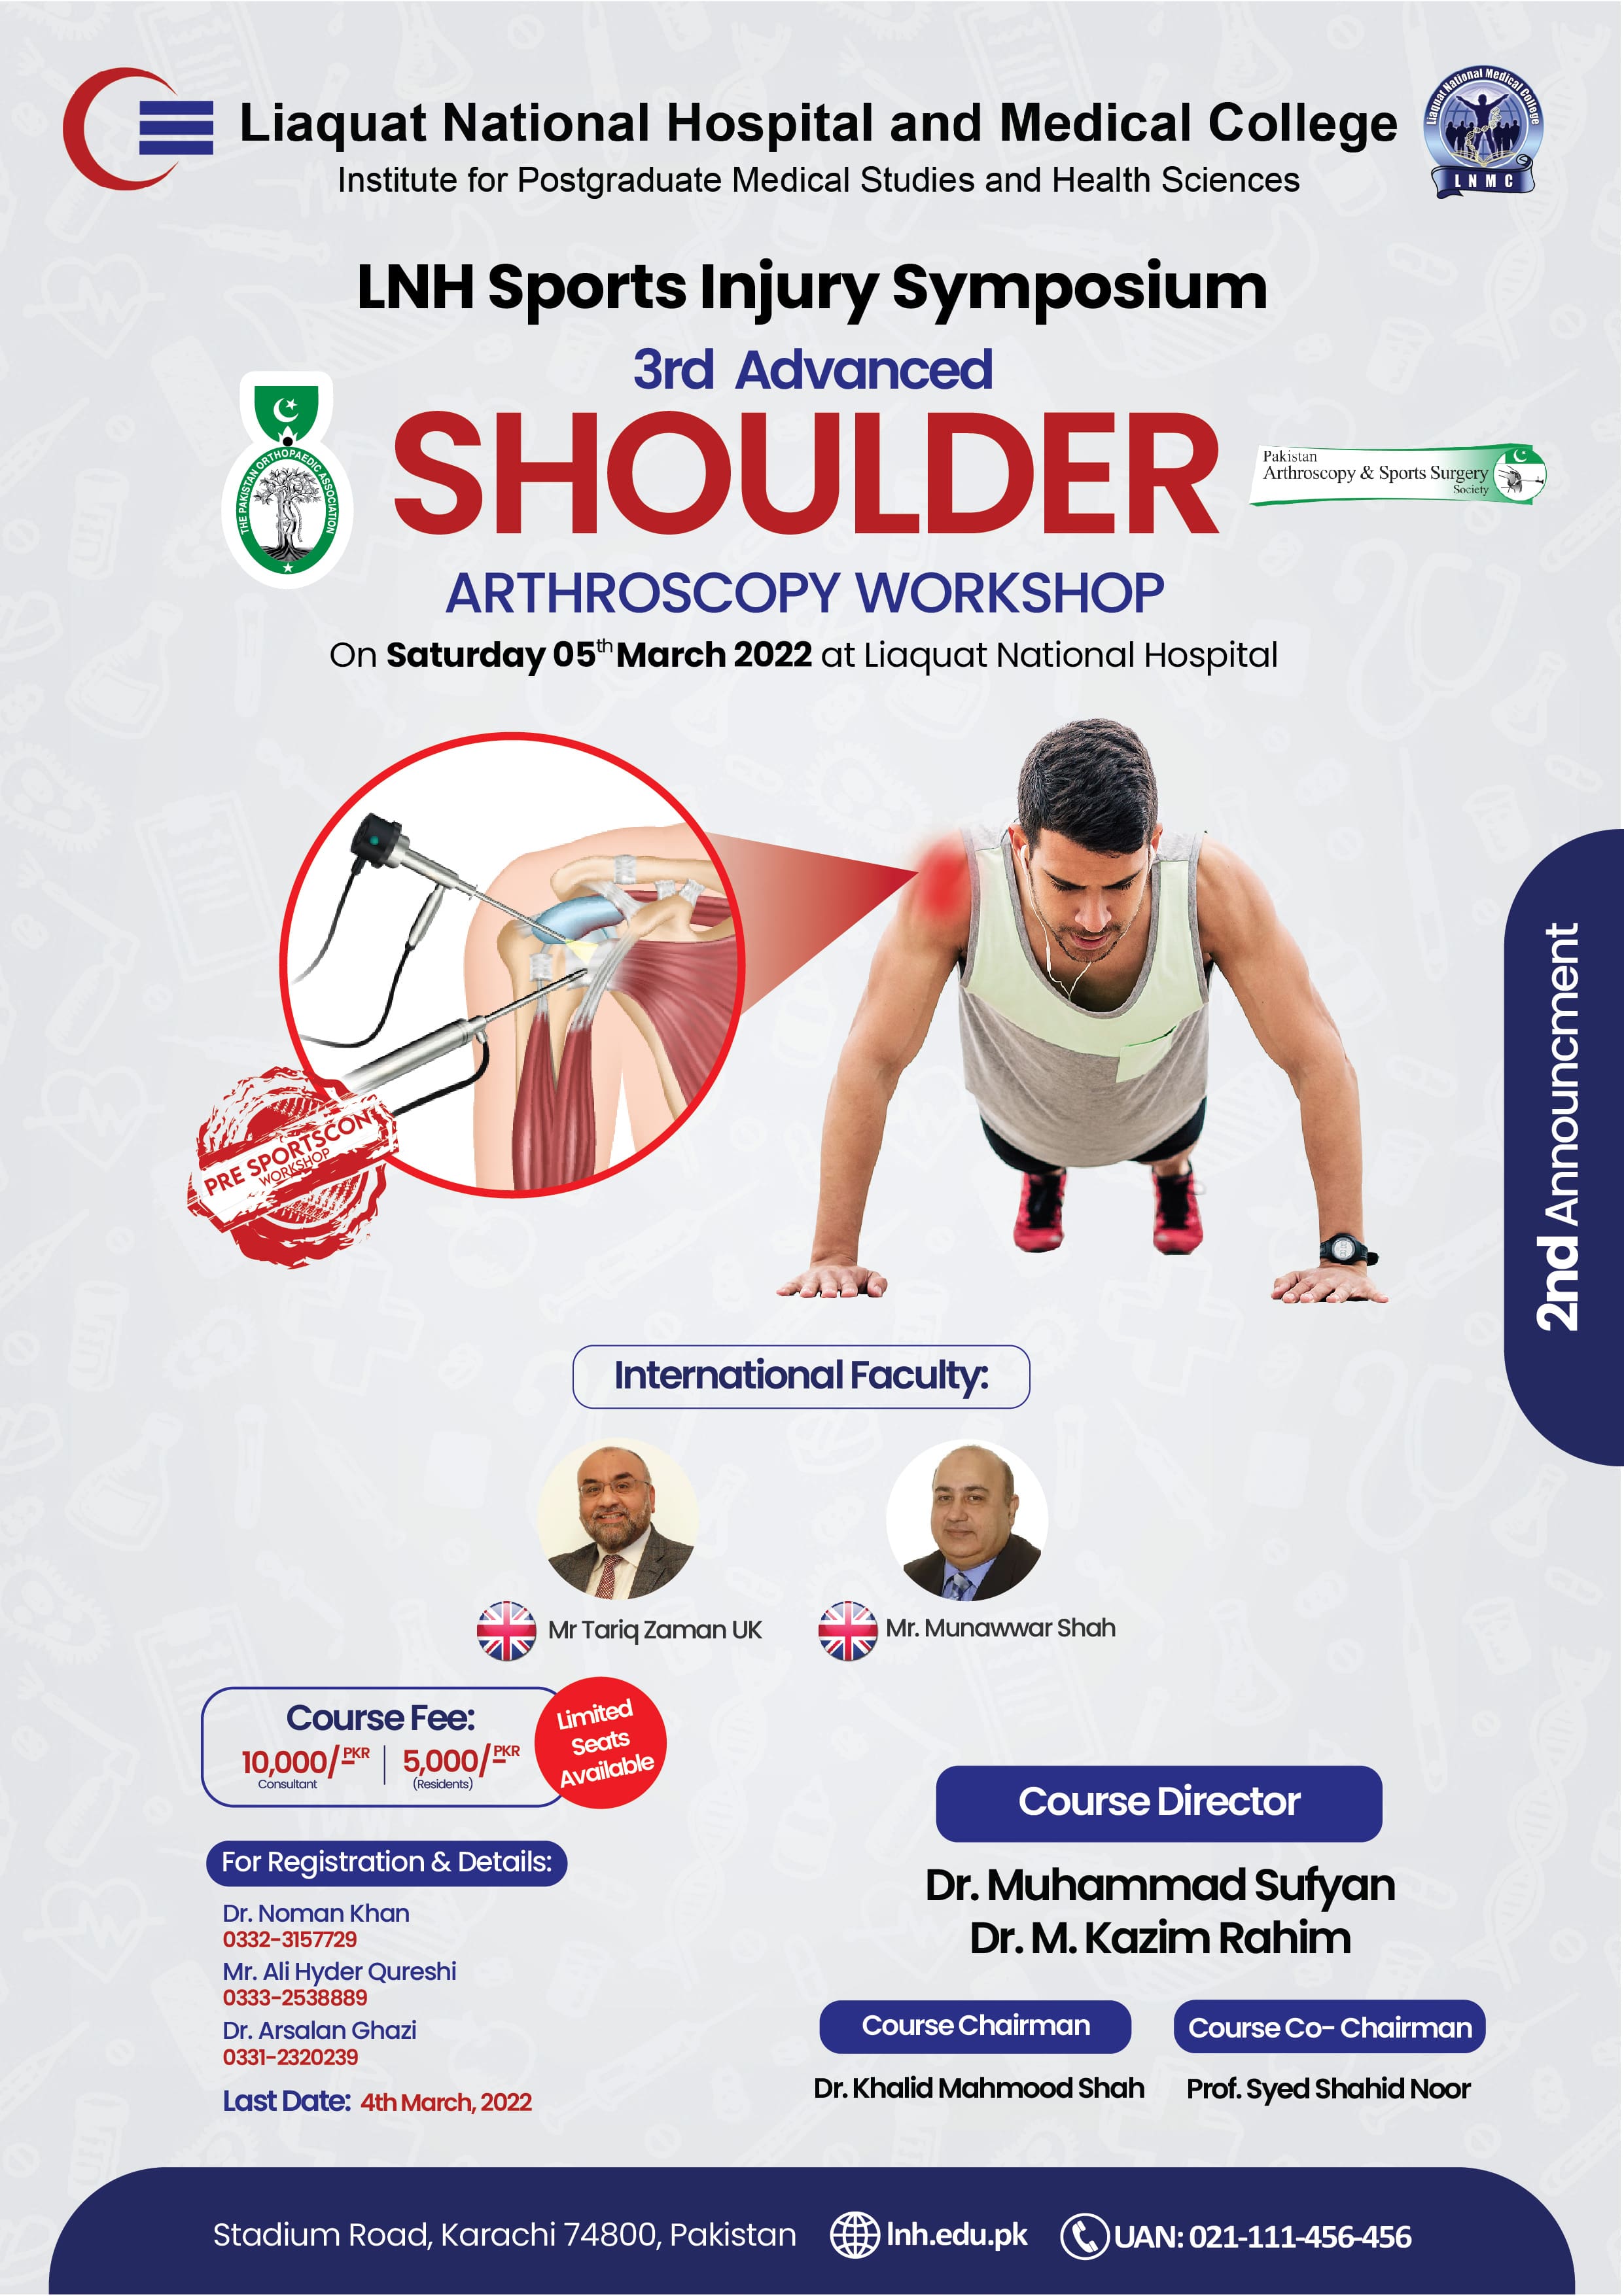 LNH Sports Injury Symposium: 3rd Advanced Knee and Shoulder Arthroscopy Workshops